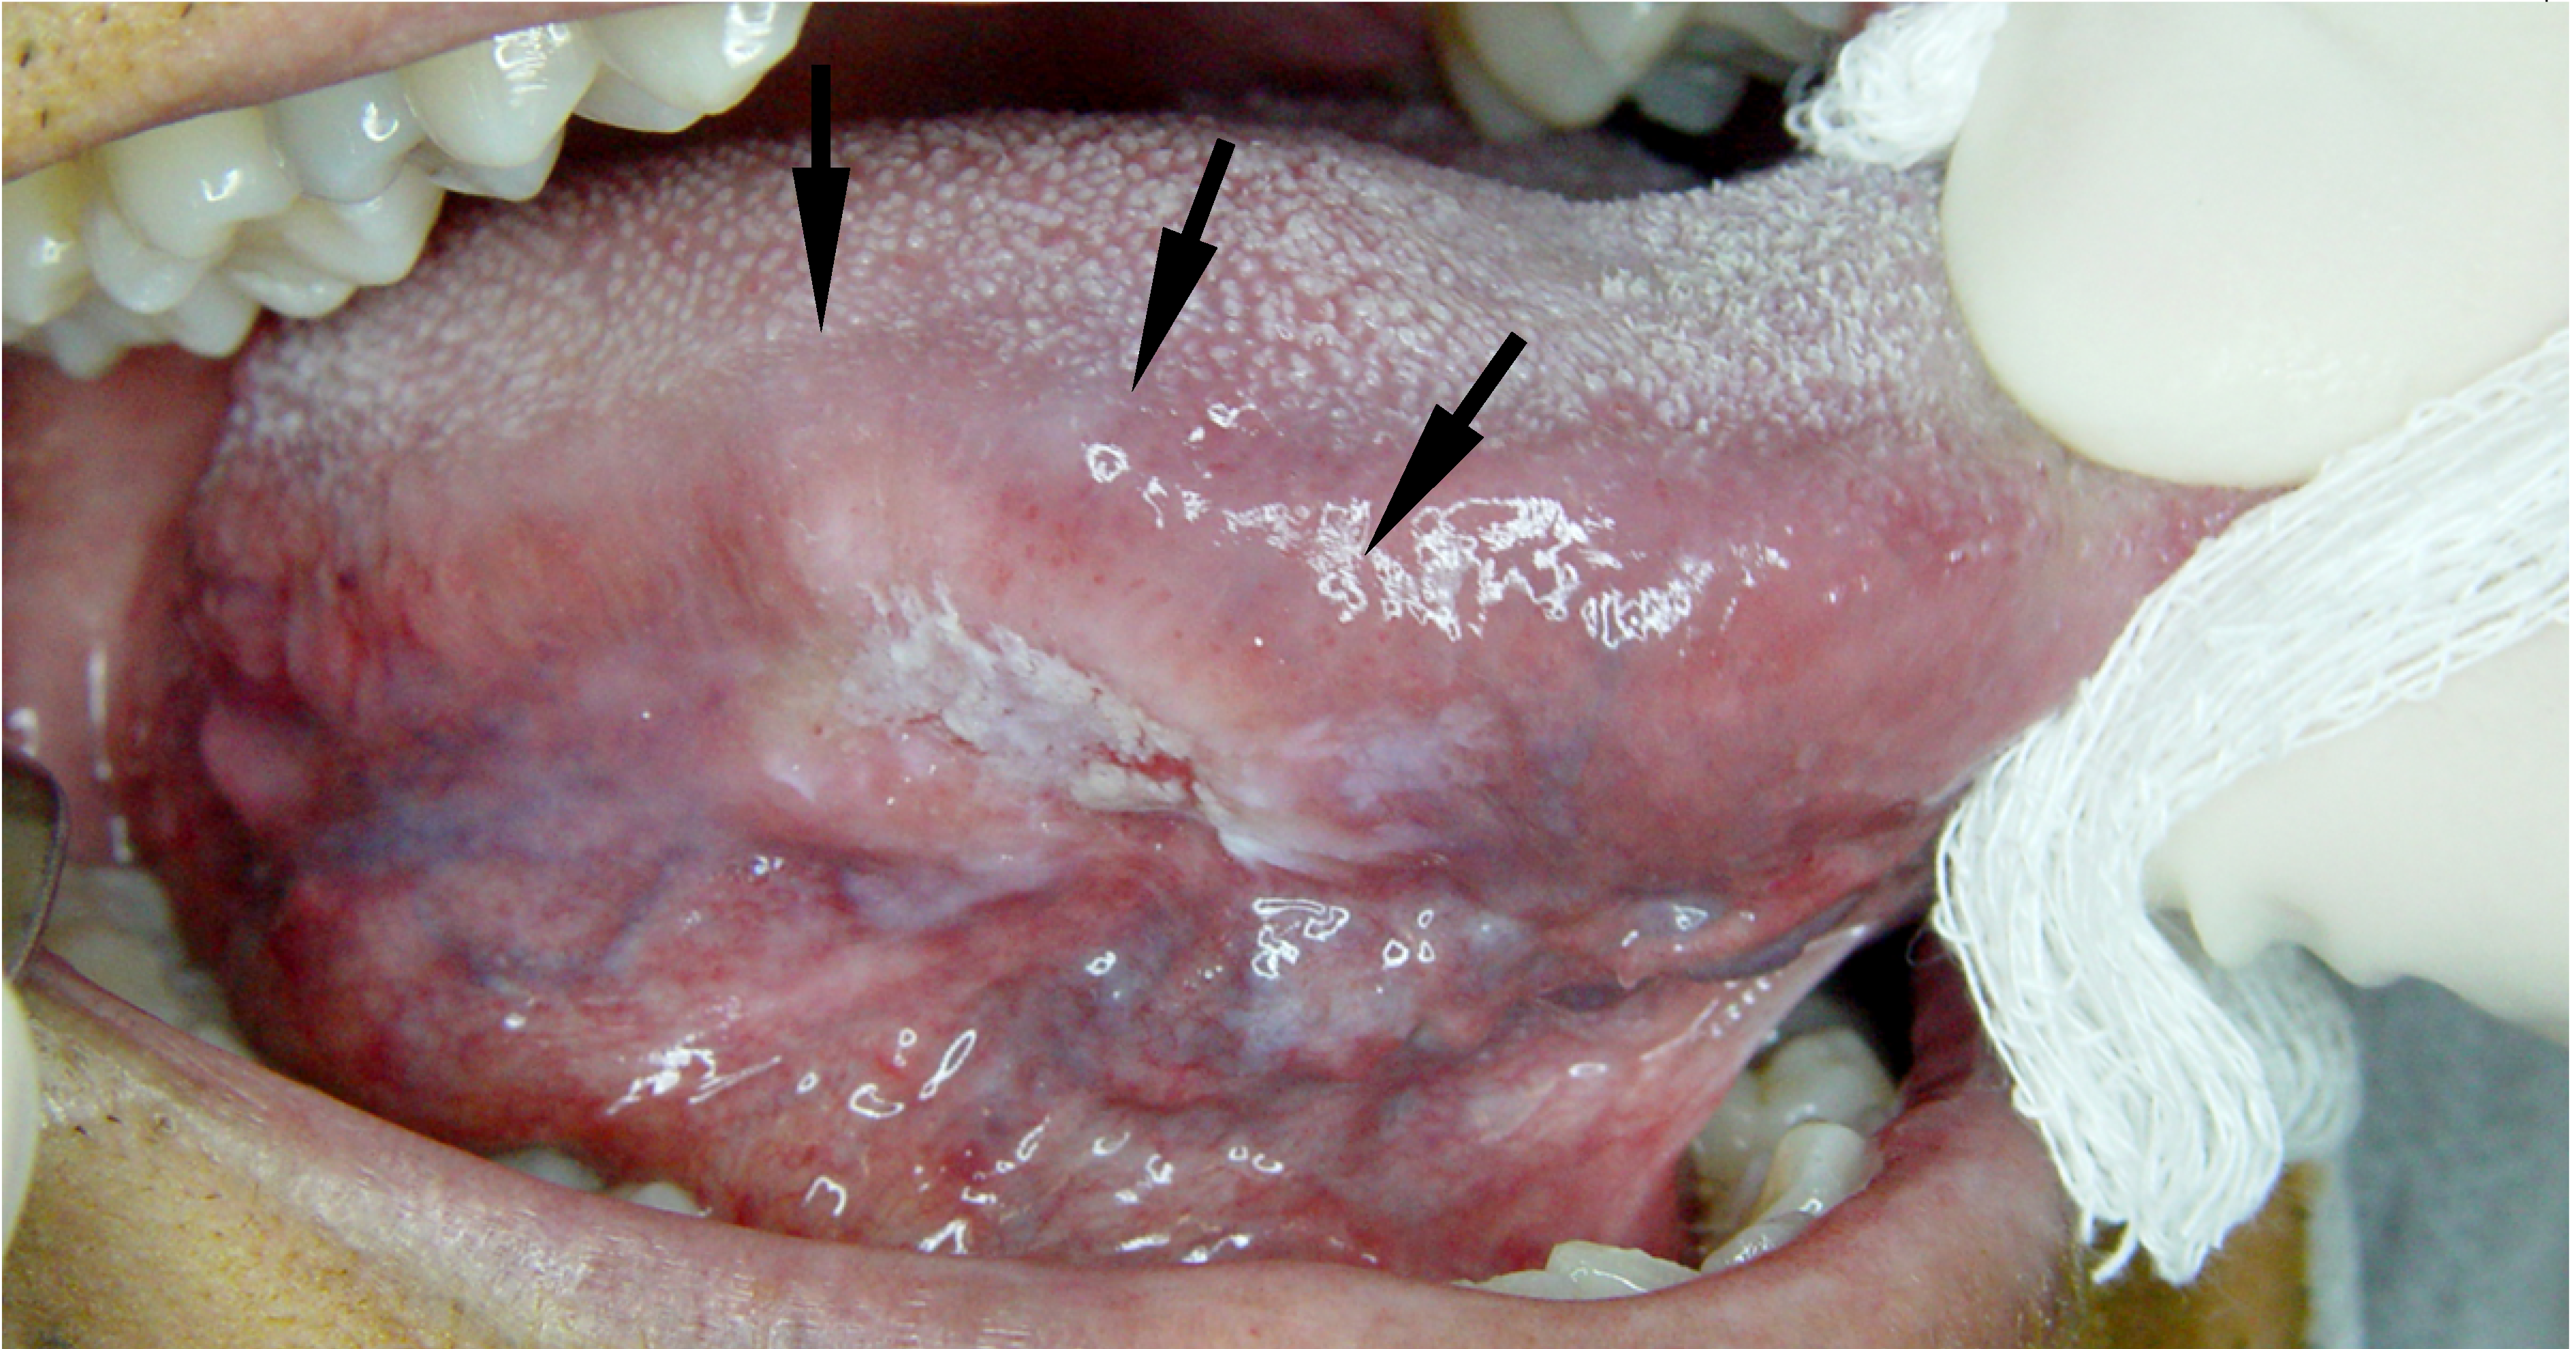 hpv base of tongue cancer prognosis